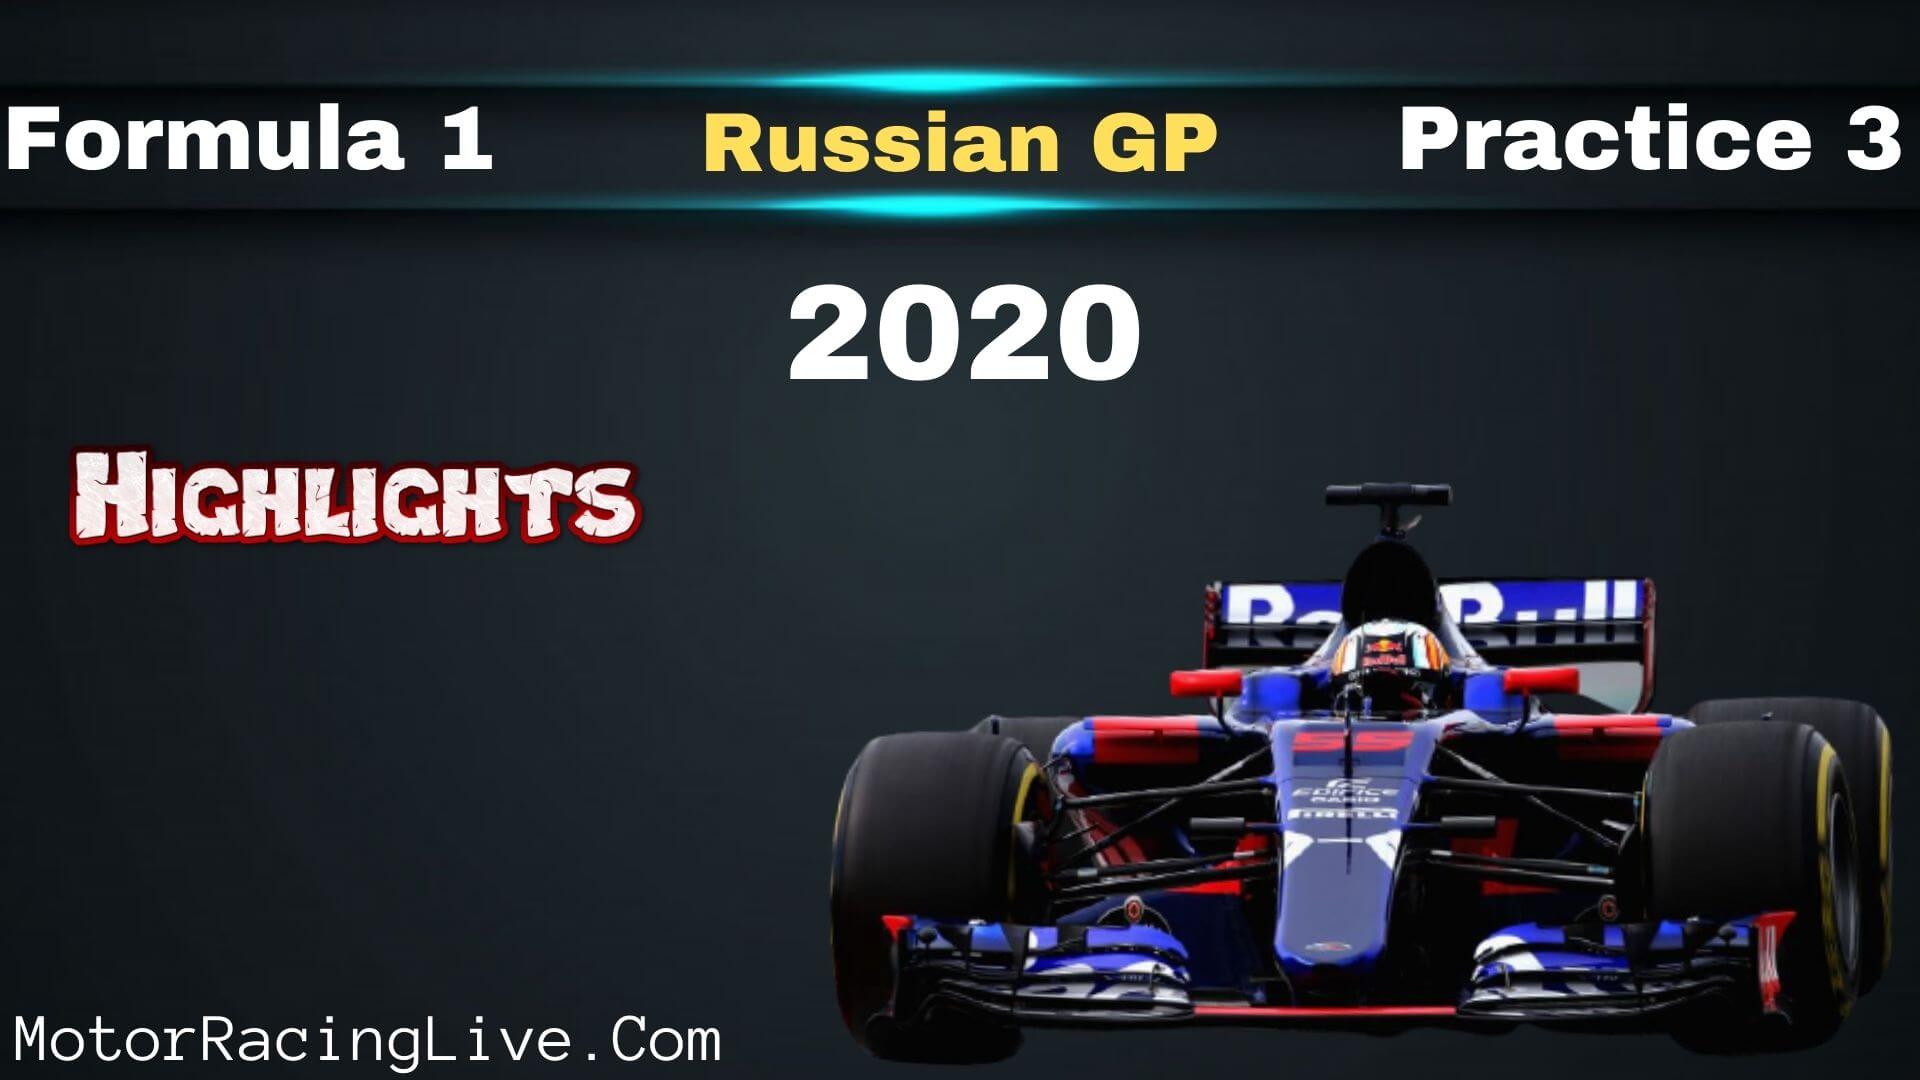 F1 Practice 3 Russian GP Race 2020 Highlights